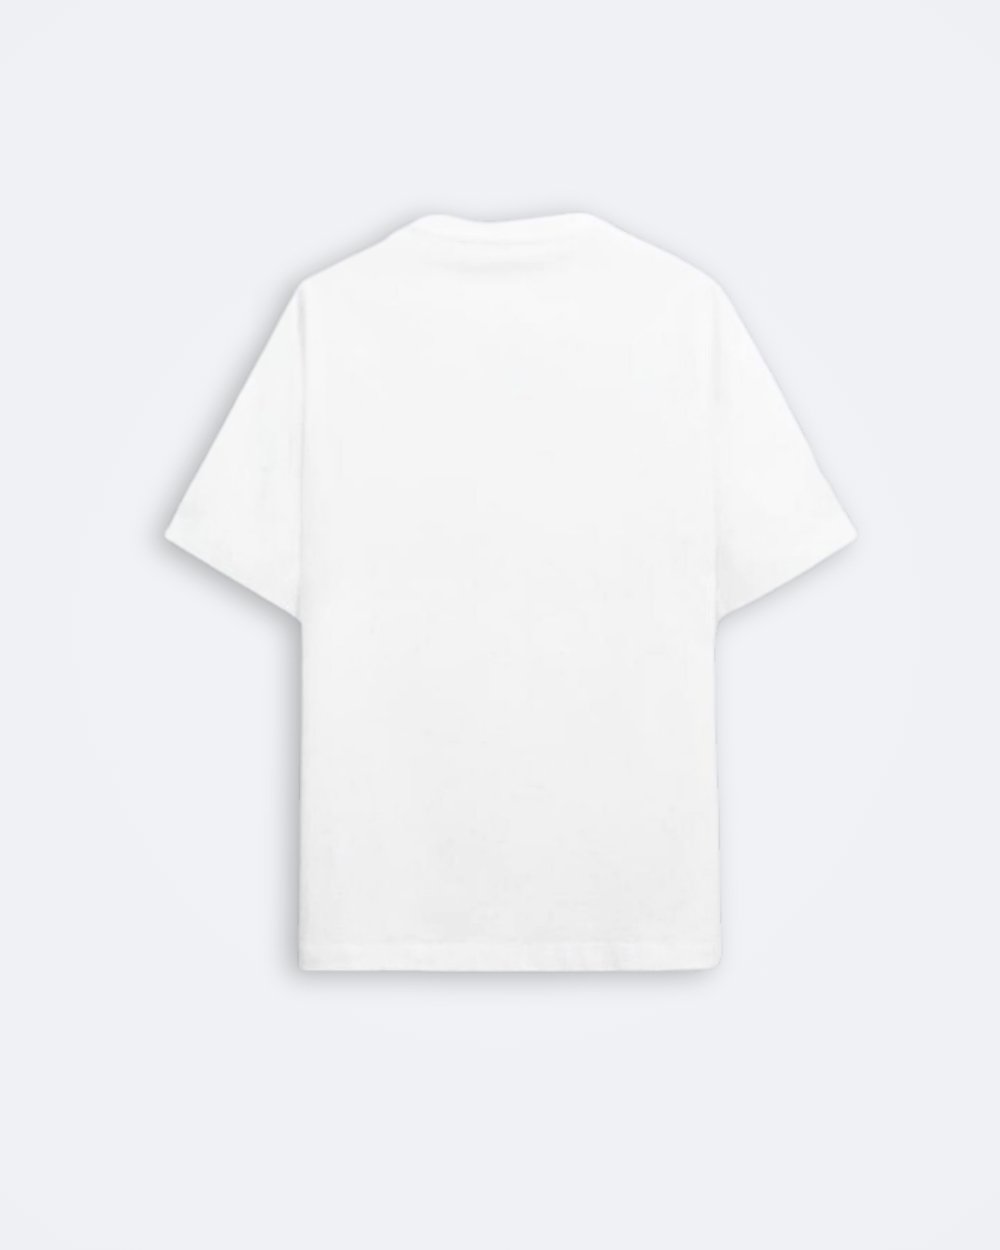 Court Life Neon T - Shirt - FURYCRY® | Tennis Streetwear